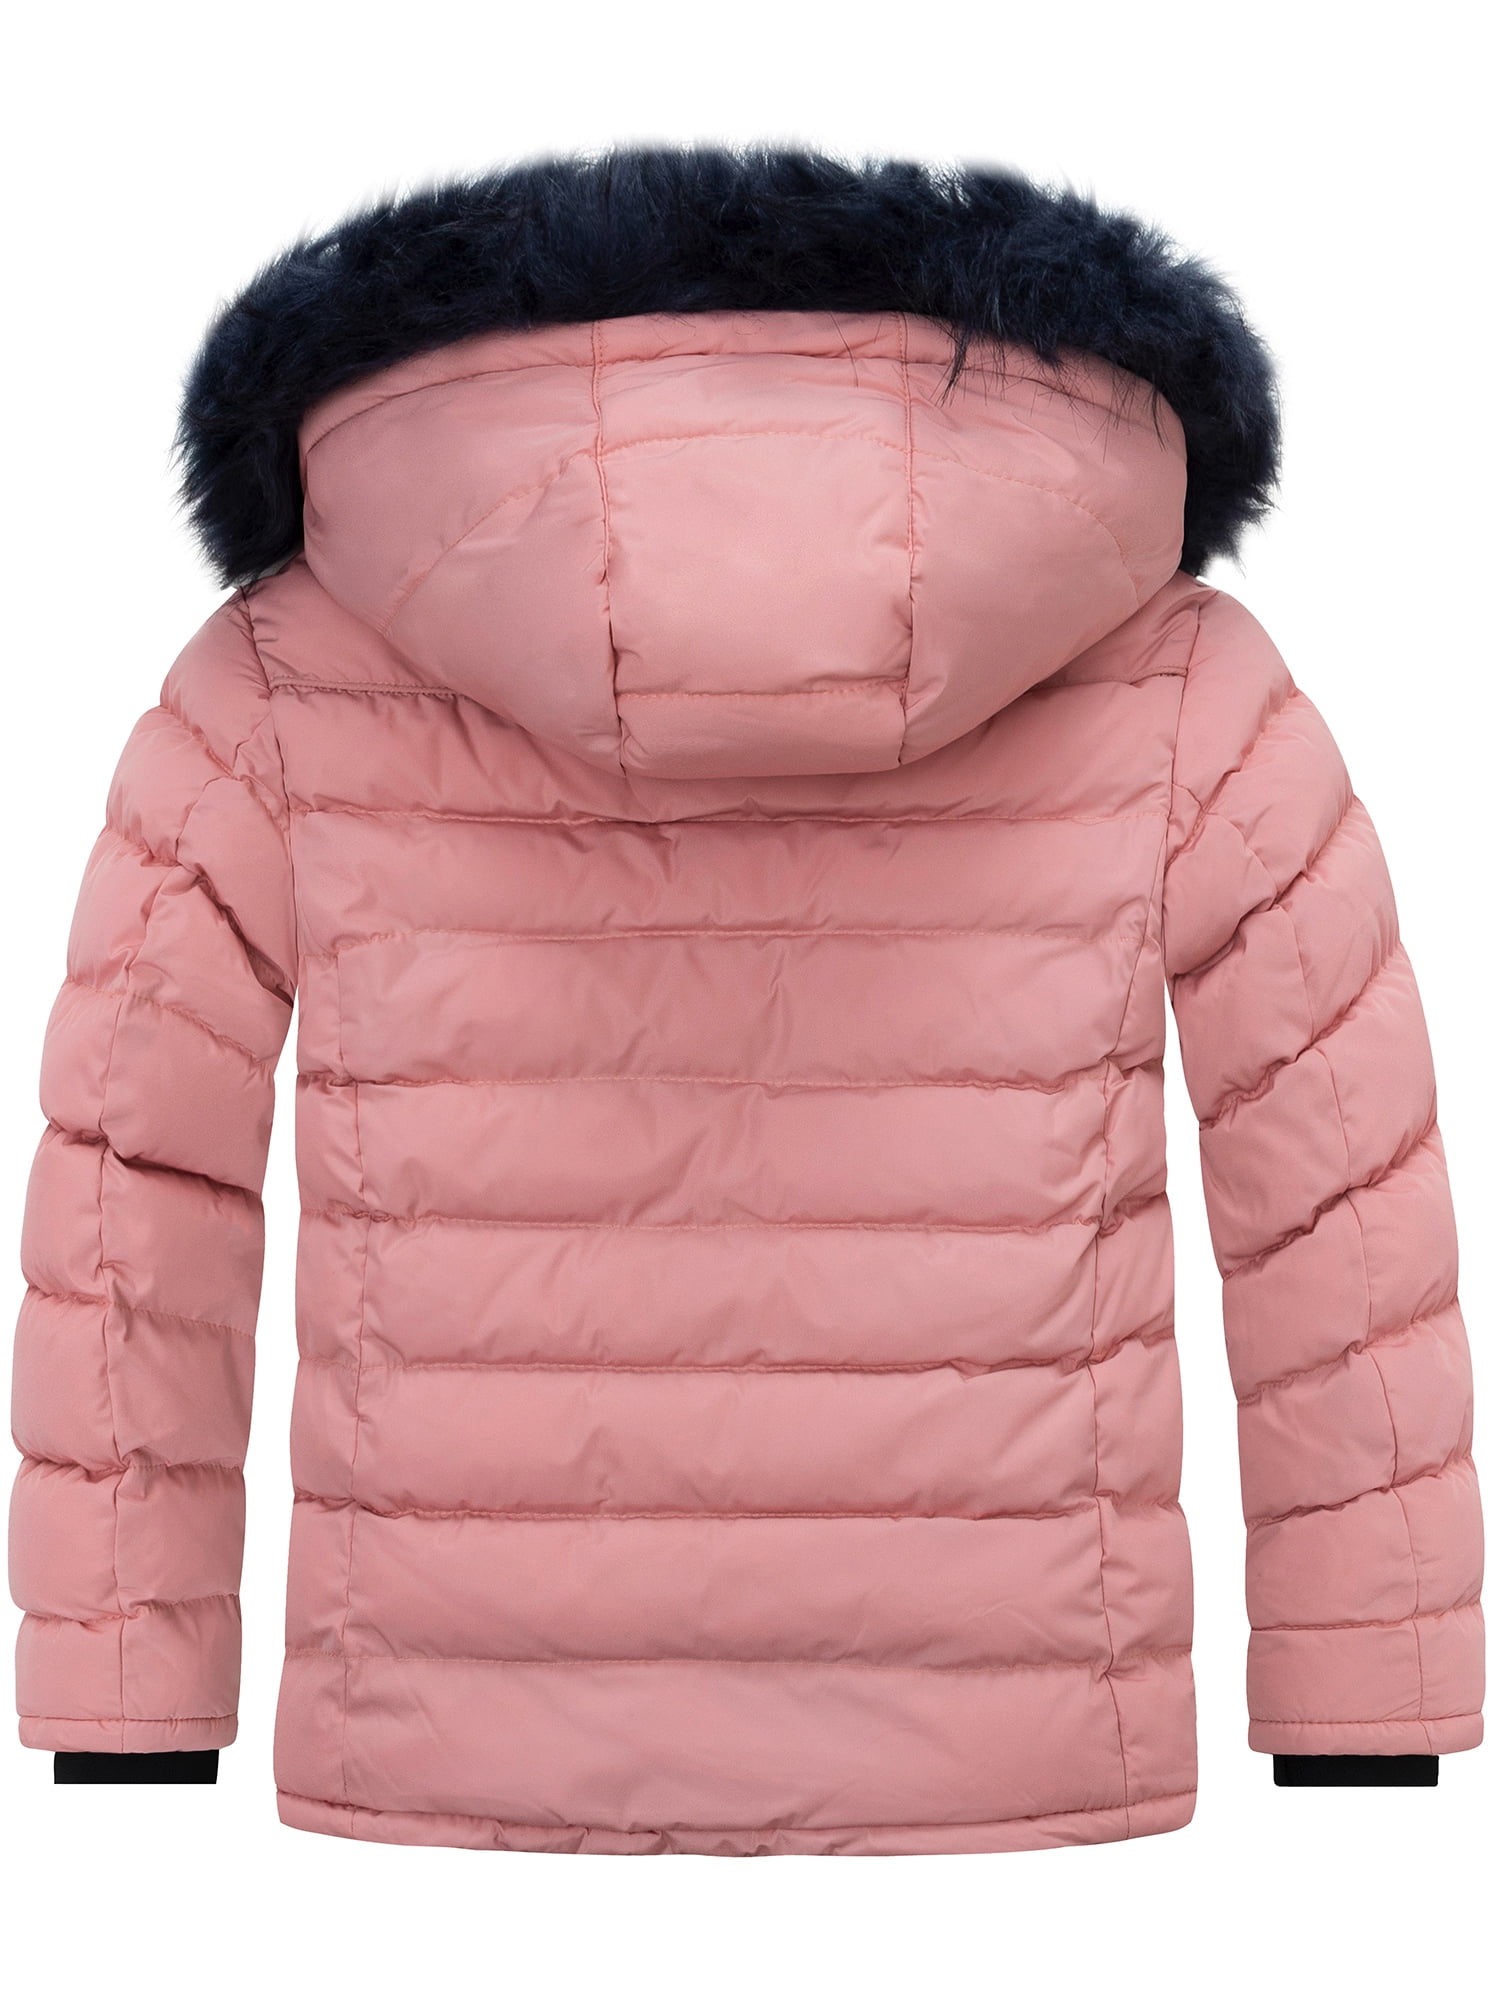 Puffy Jacket Puffer 14/16 Coral ZSHOW Girls\' Jacket Windproof Winter Pink Coat Padded Waterptproof